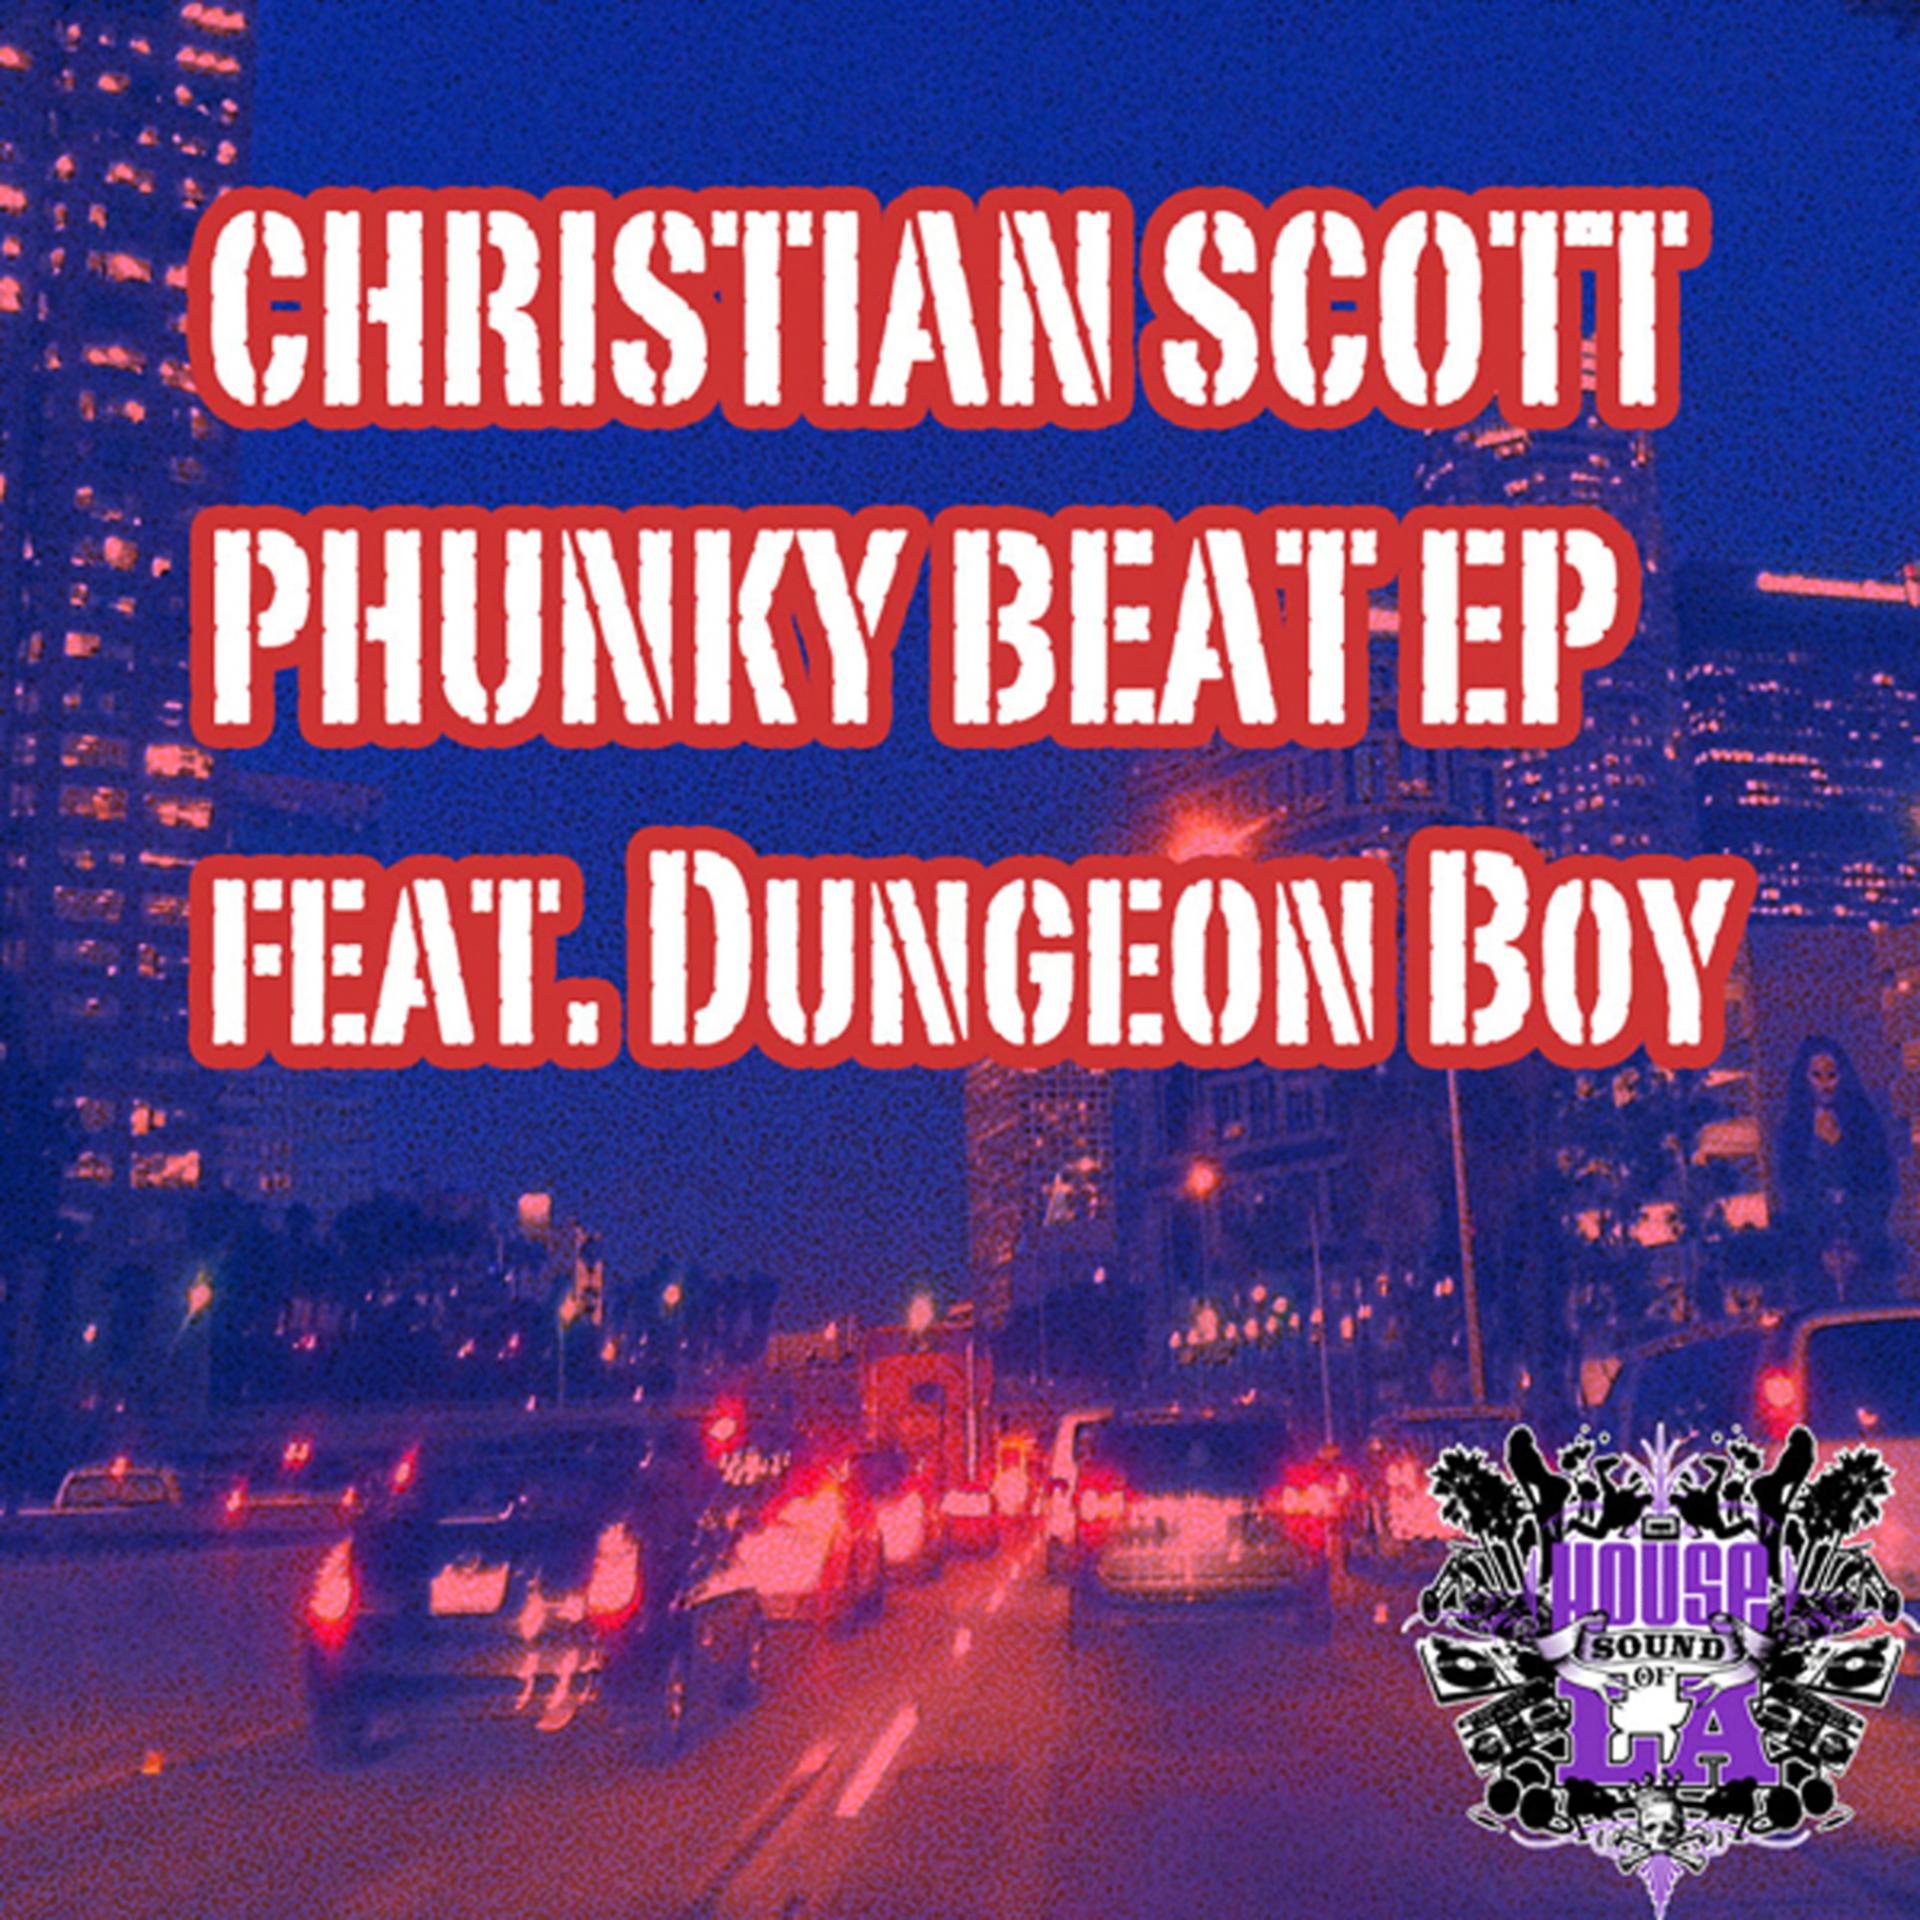 Постер к треку Dungeon Boy, Christian Scott - Christian Scott Is Excited (Original Mix)